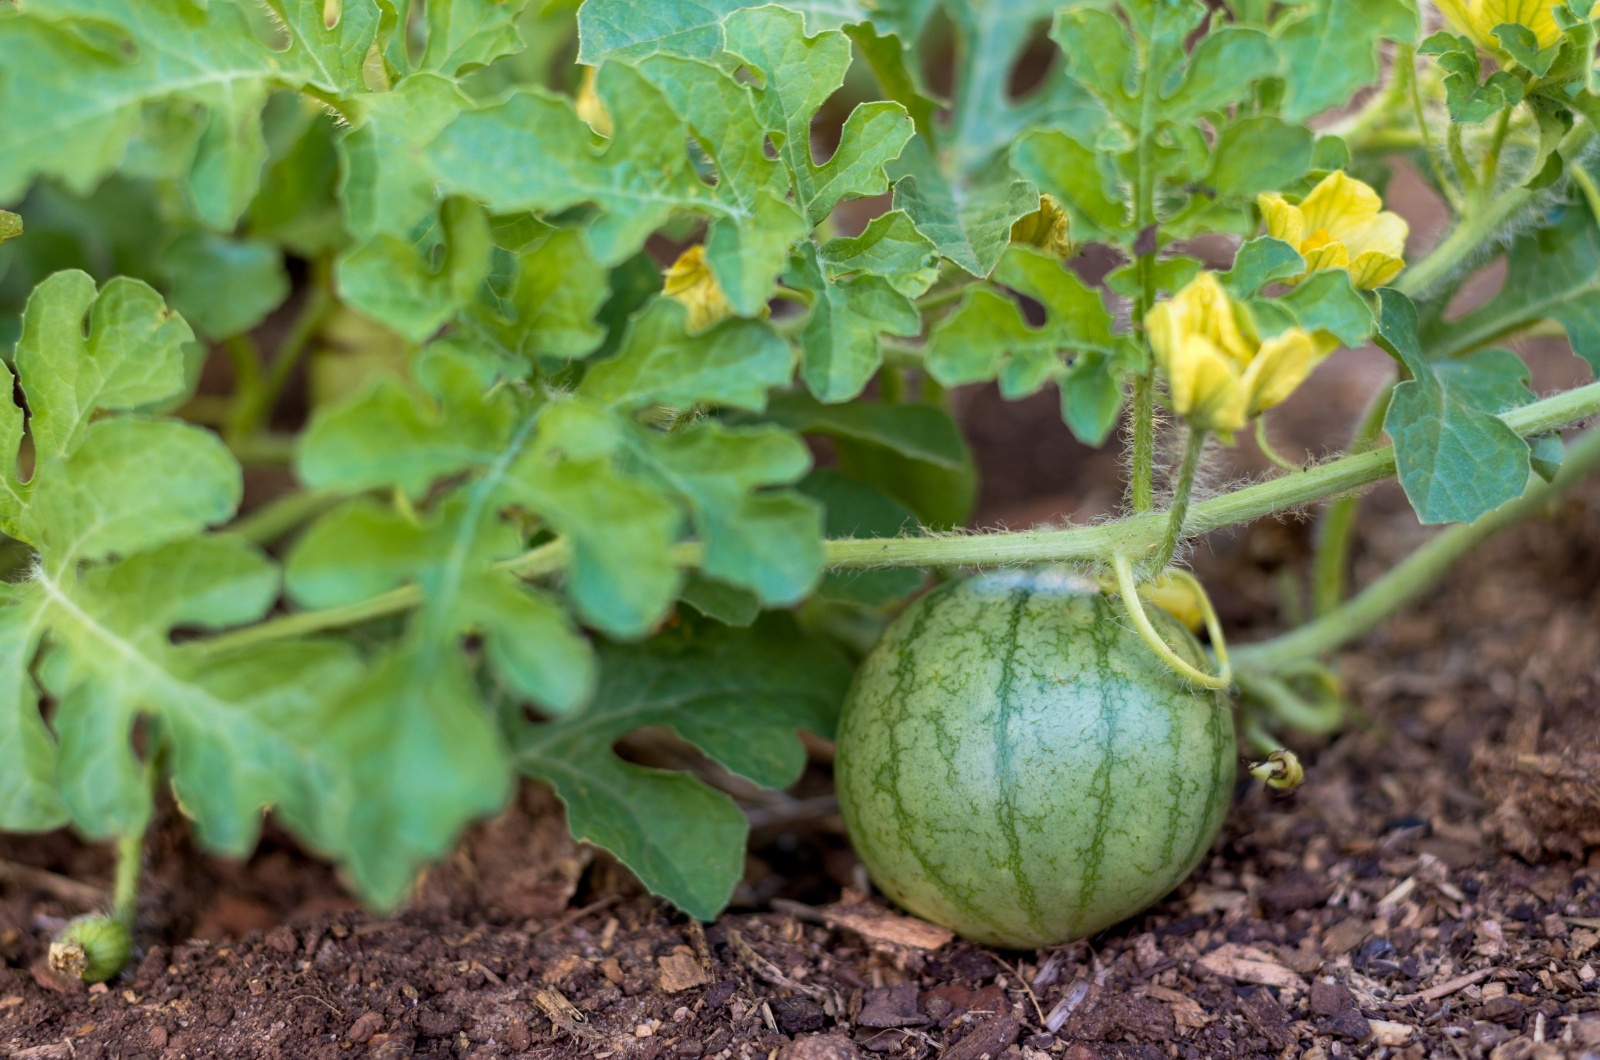 Organic baby watermelon growing in garden